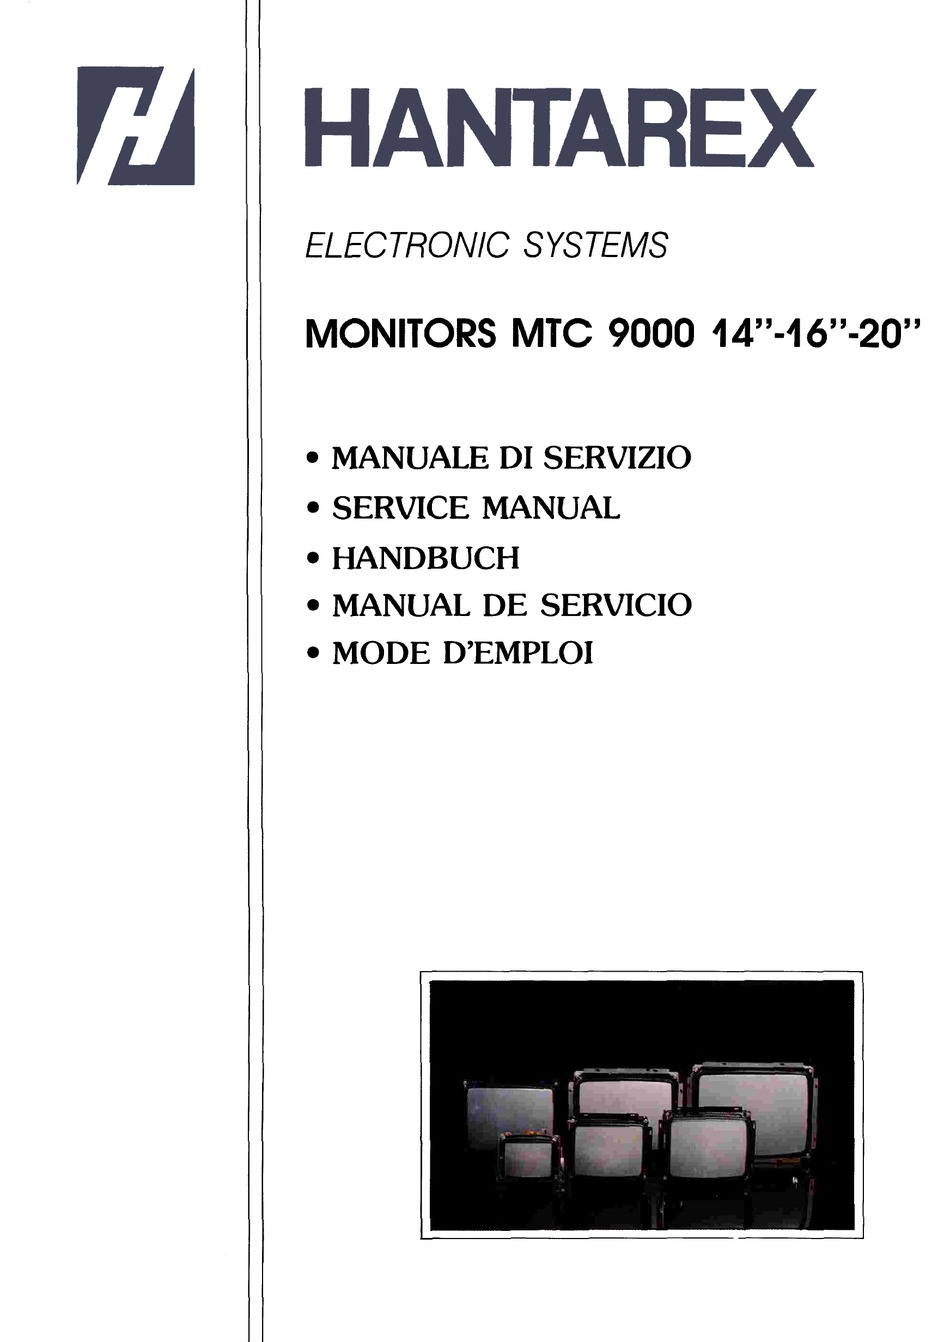 good used original Hantarex MONITOR MTC 900 19" Service Manual 